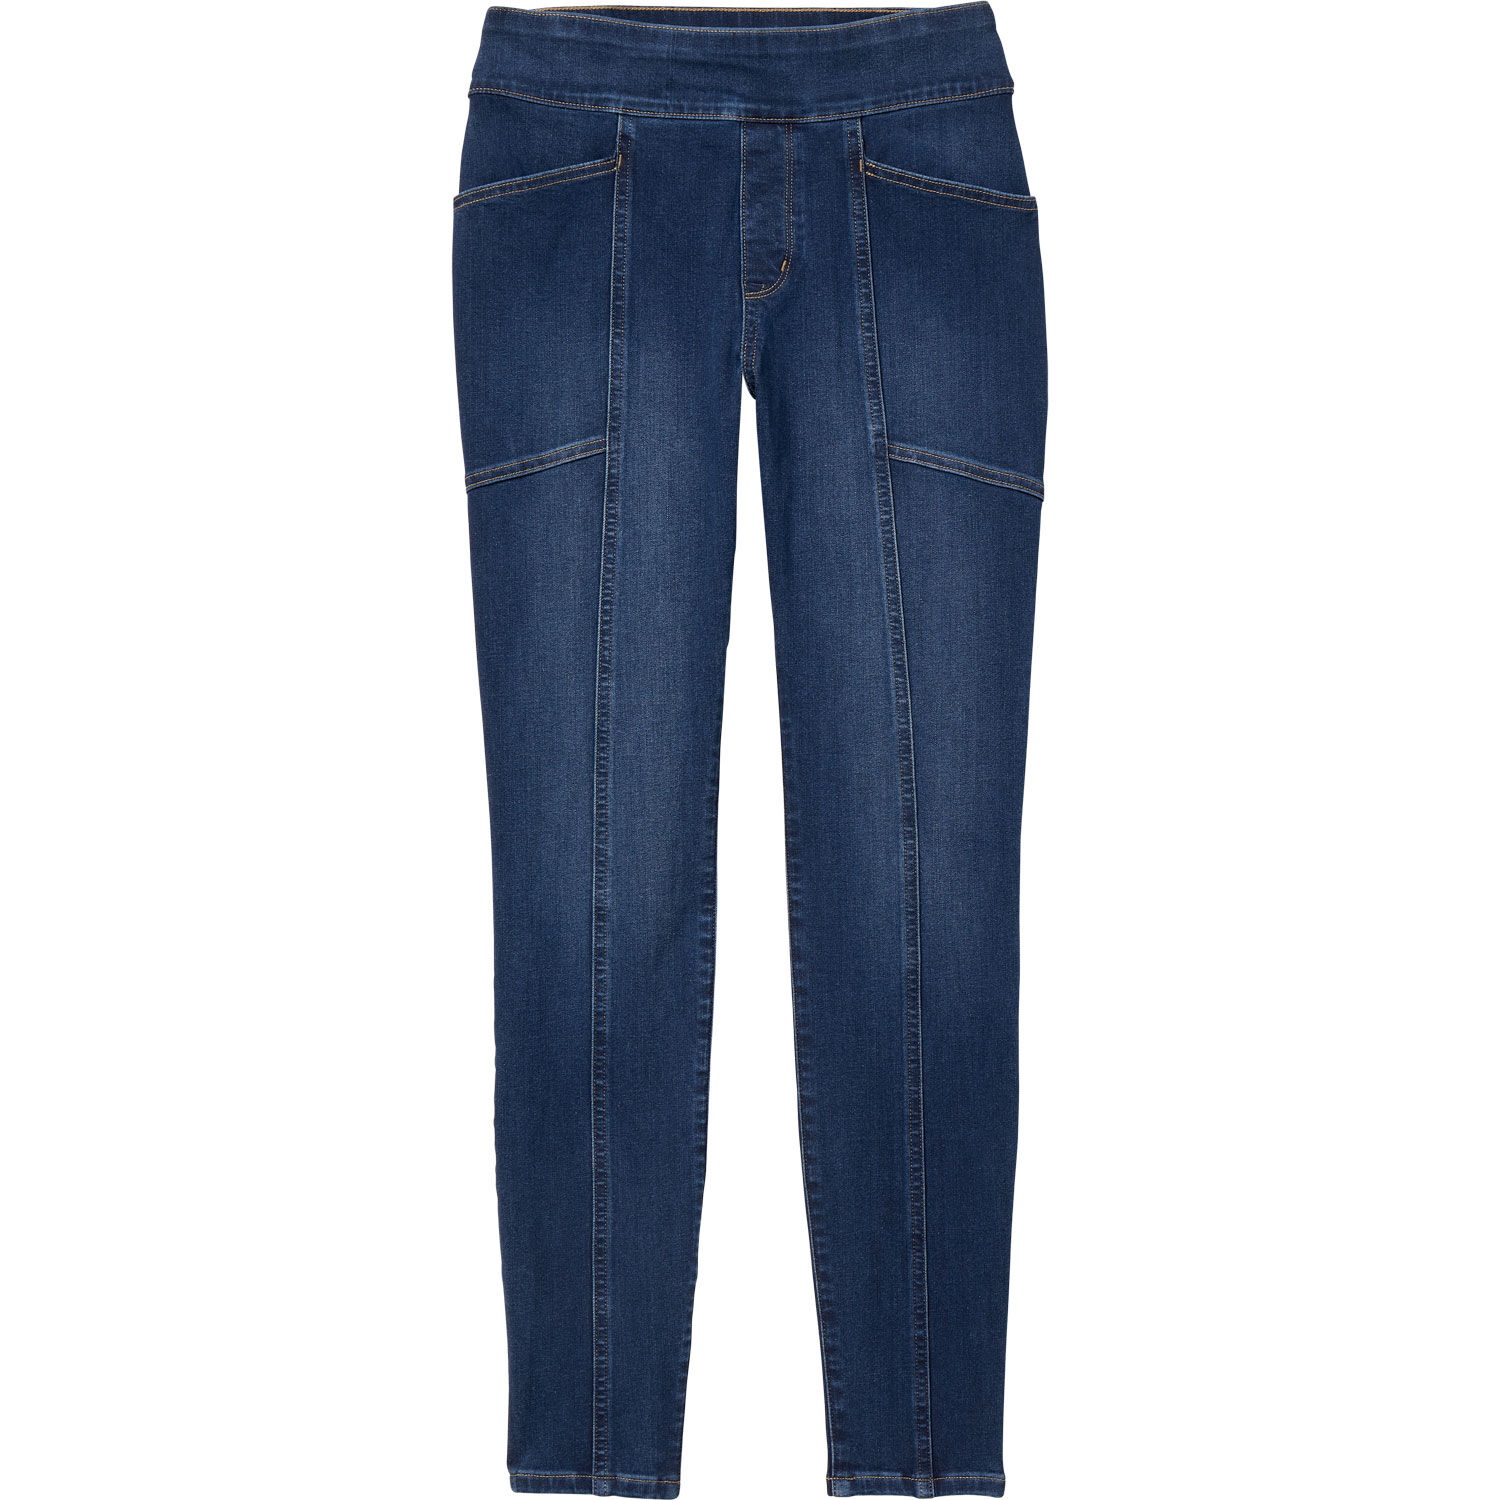 Silver Jeans Co. Women's Avery High Rise Curvy Fit Trouser Leg Jeans-Legacy,  Blue, 24W x 31L at Amazon Women's Jeans store